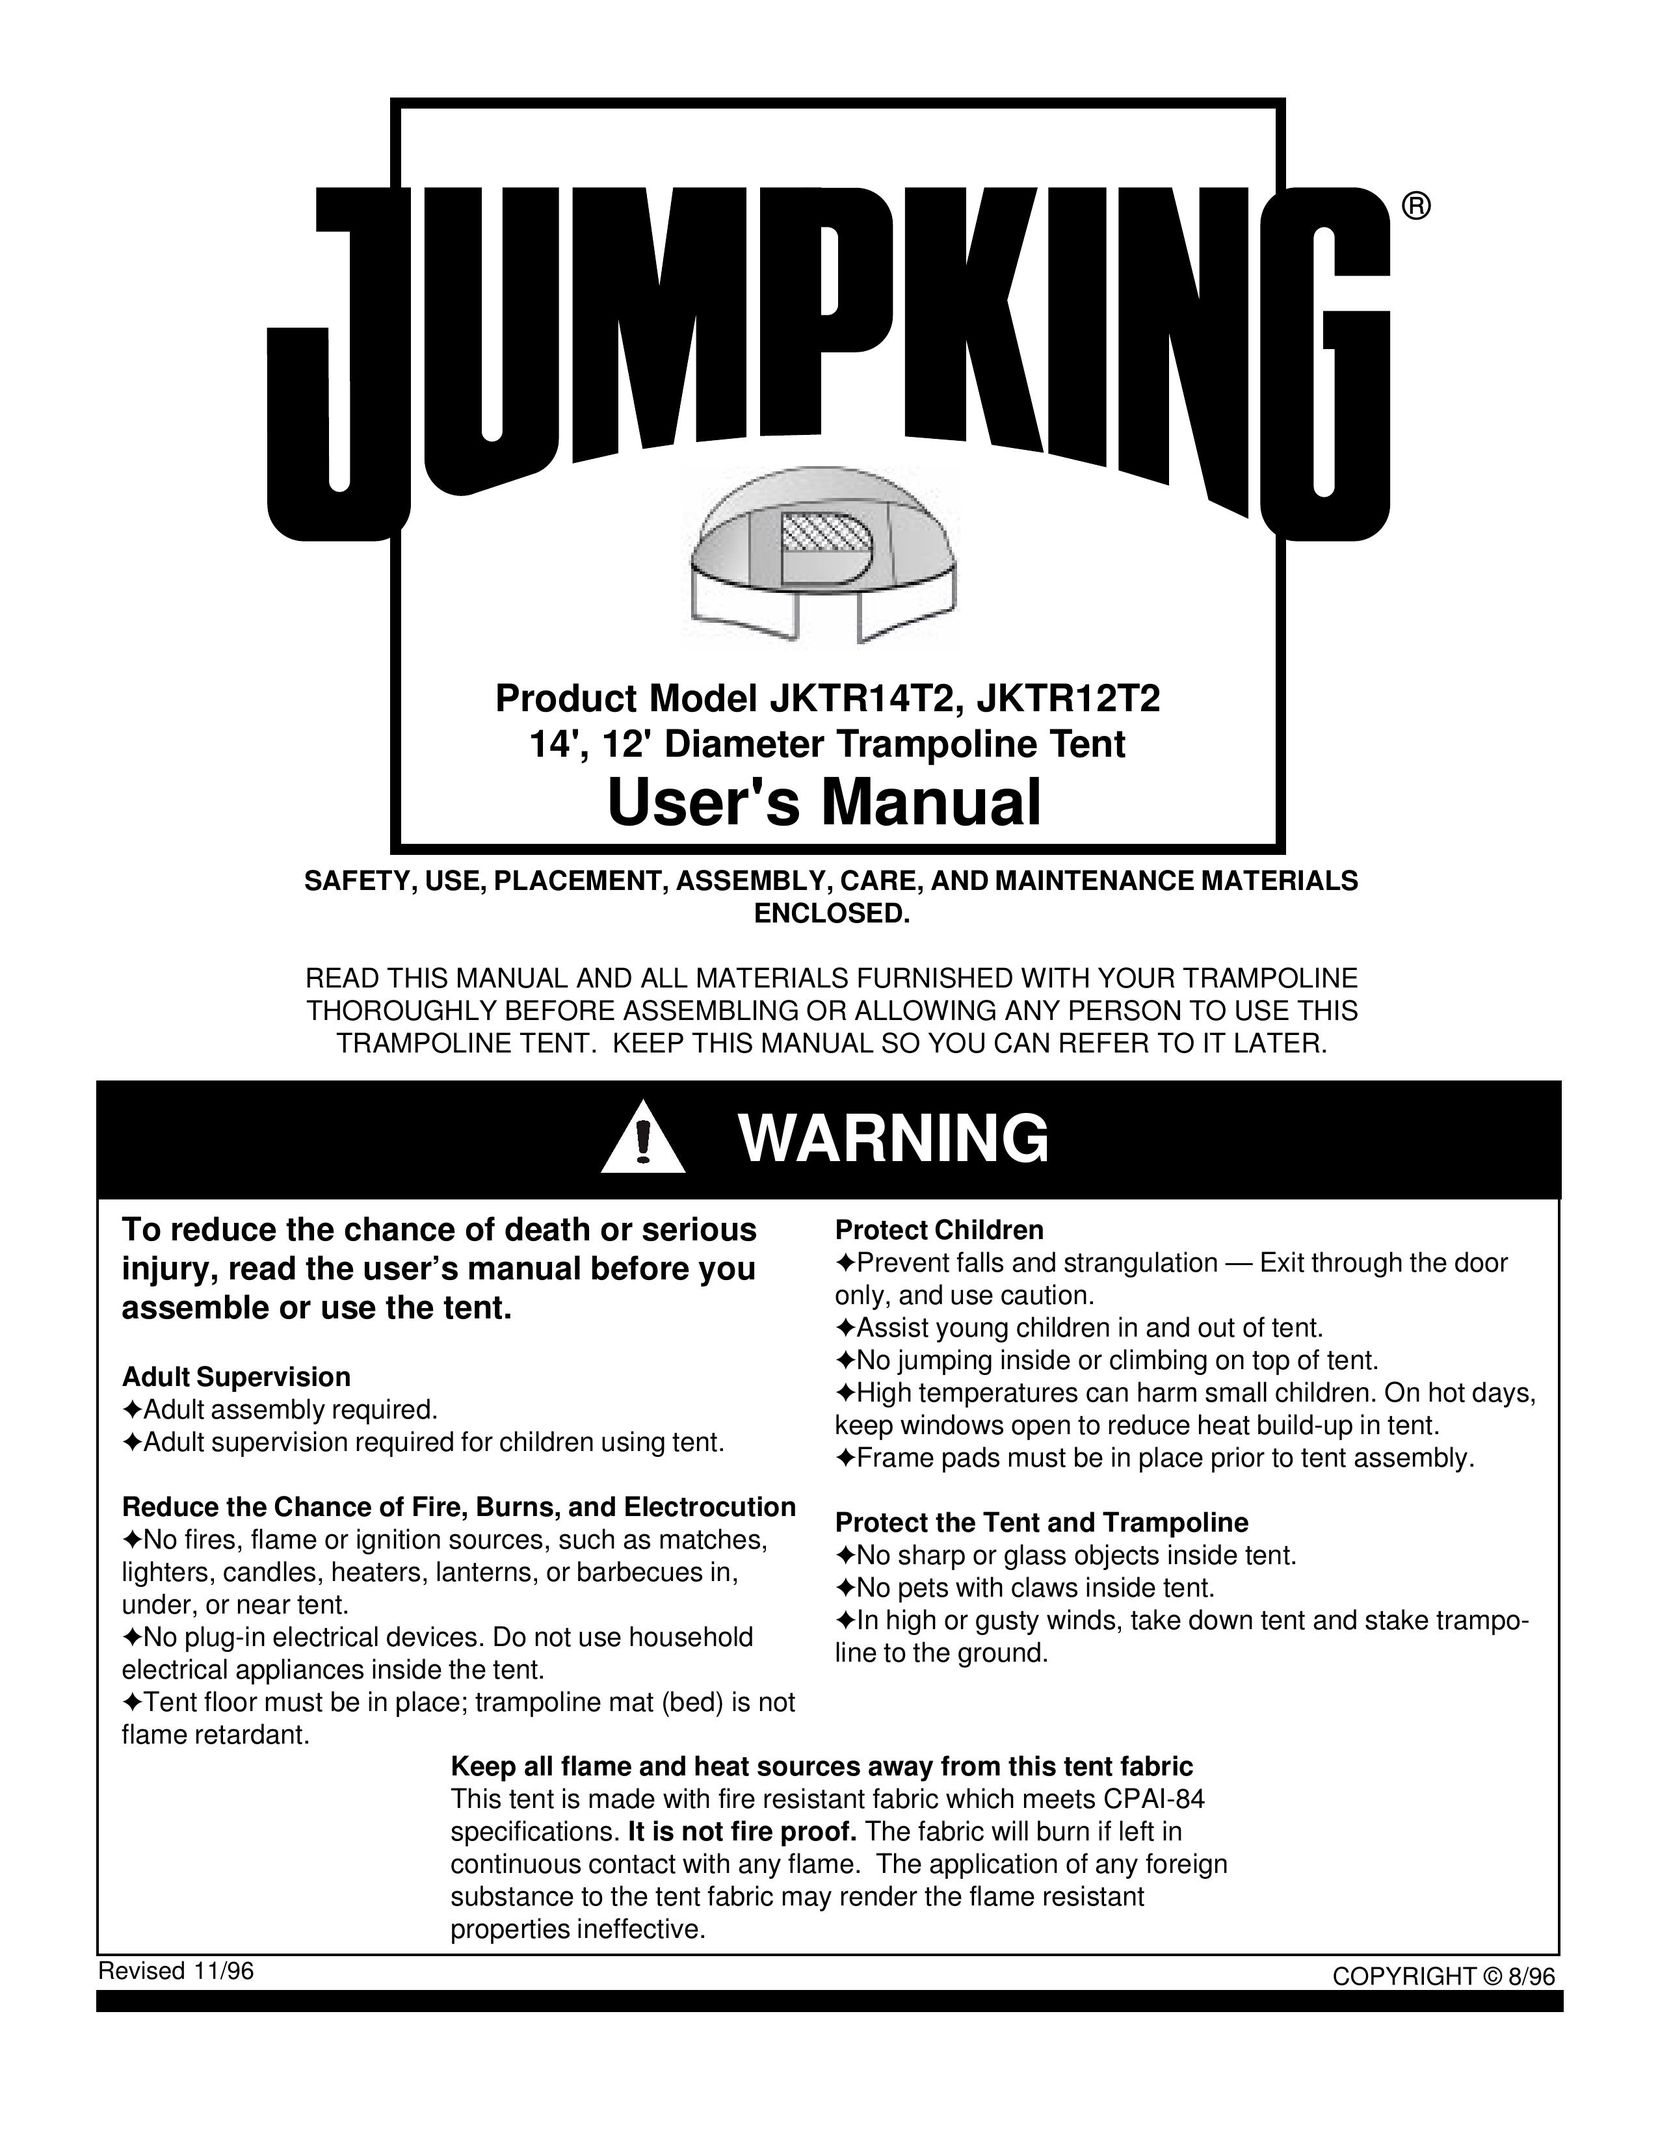 Jumpking JKTR14T2 Camping Equipment User Manual